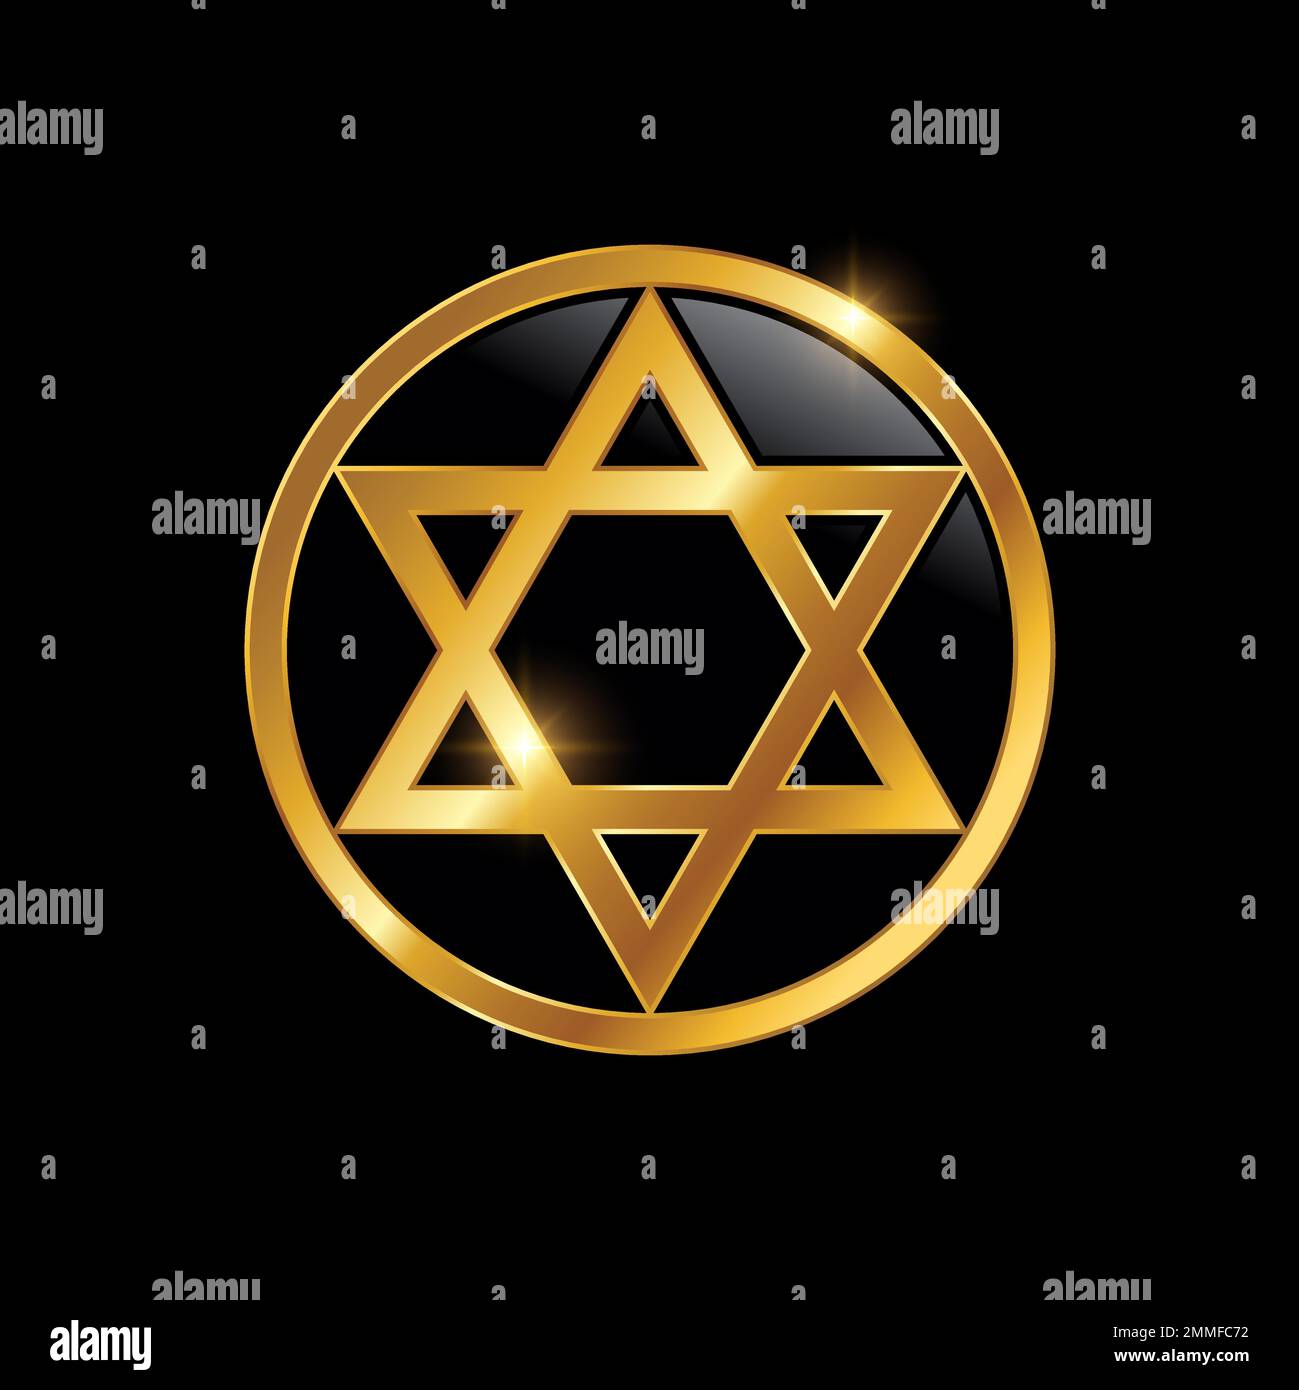 Golden Hexagram Triangle Star Logo Sign vector illustration, black background with gold shine effect Stock Vector